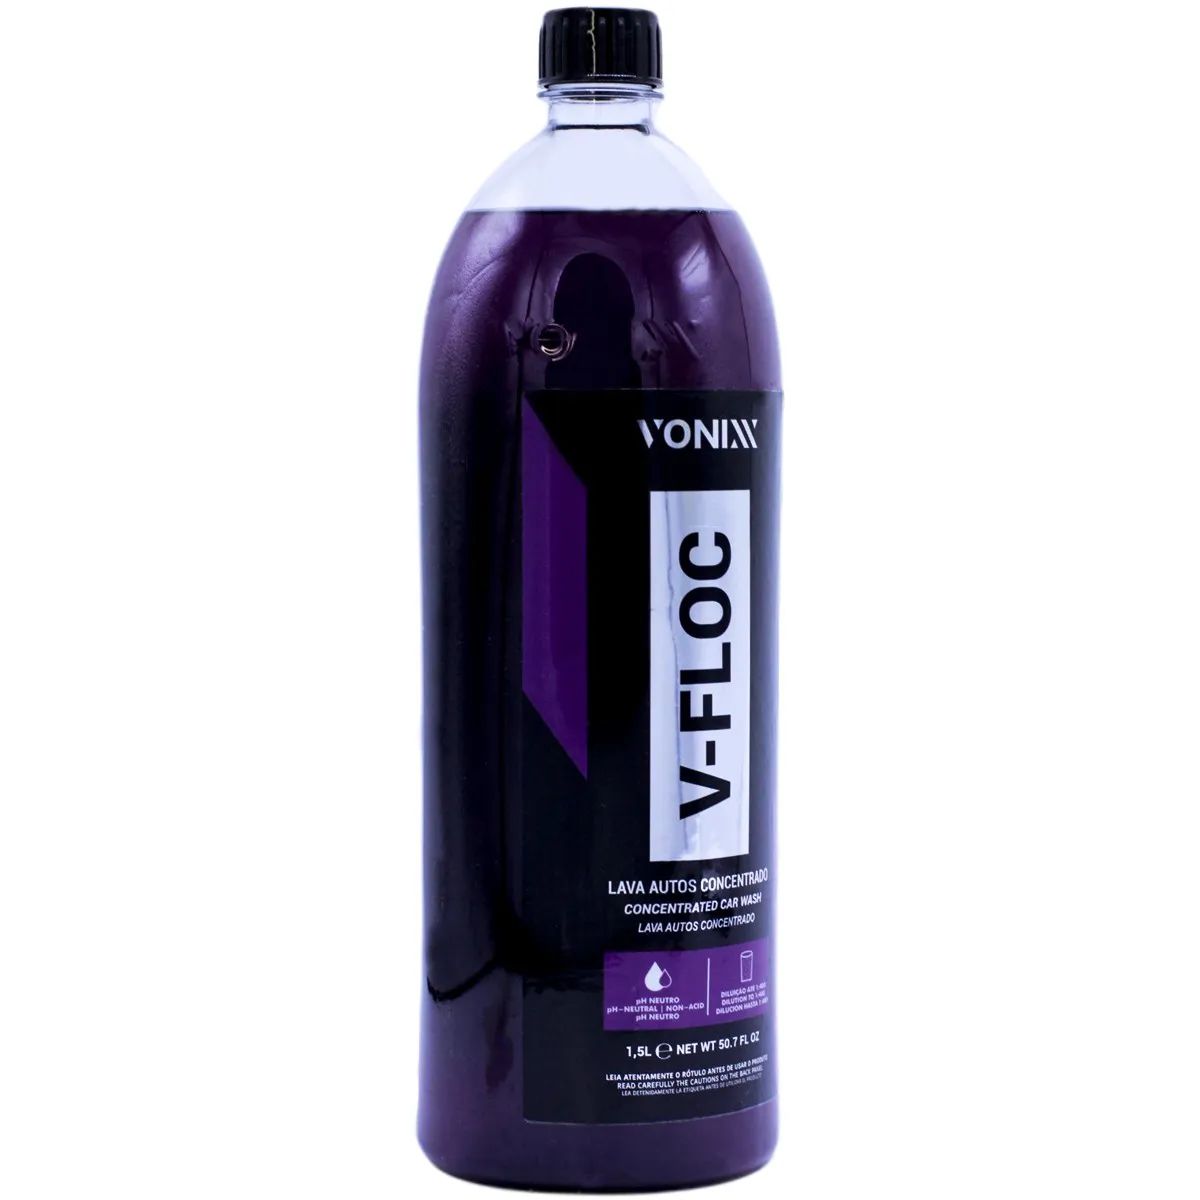 Vonixx V-Lub Clay Lubricant 101.4 fl oz (3L)